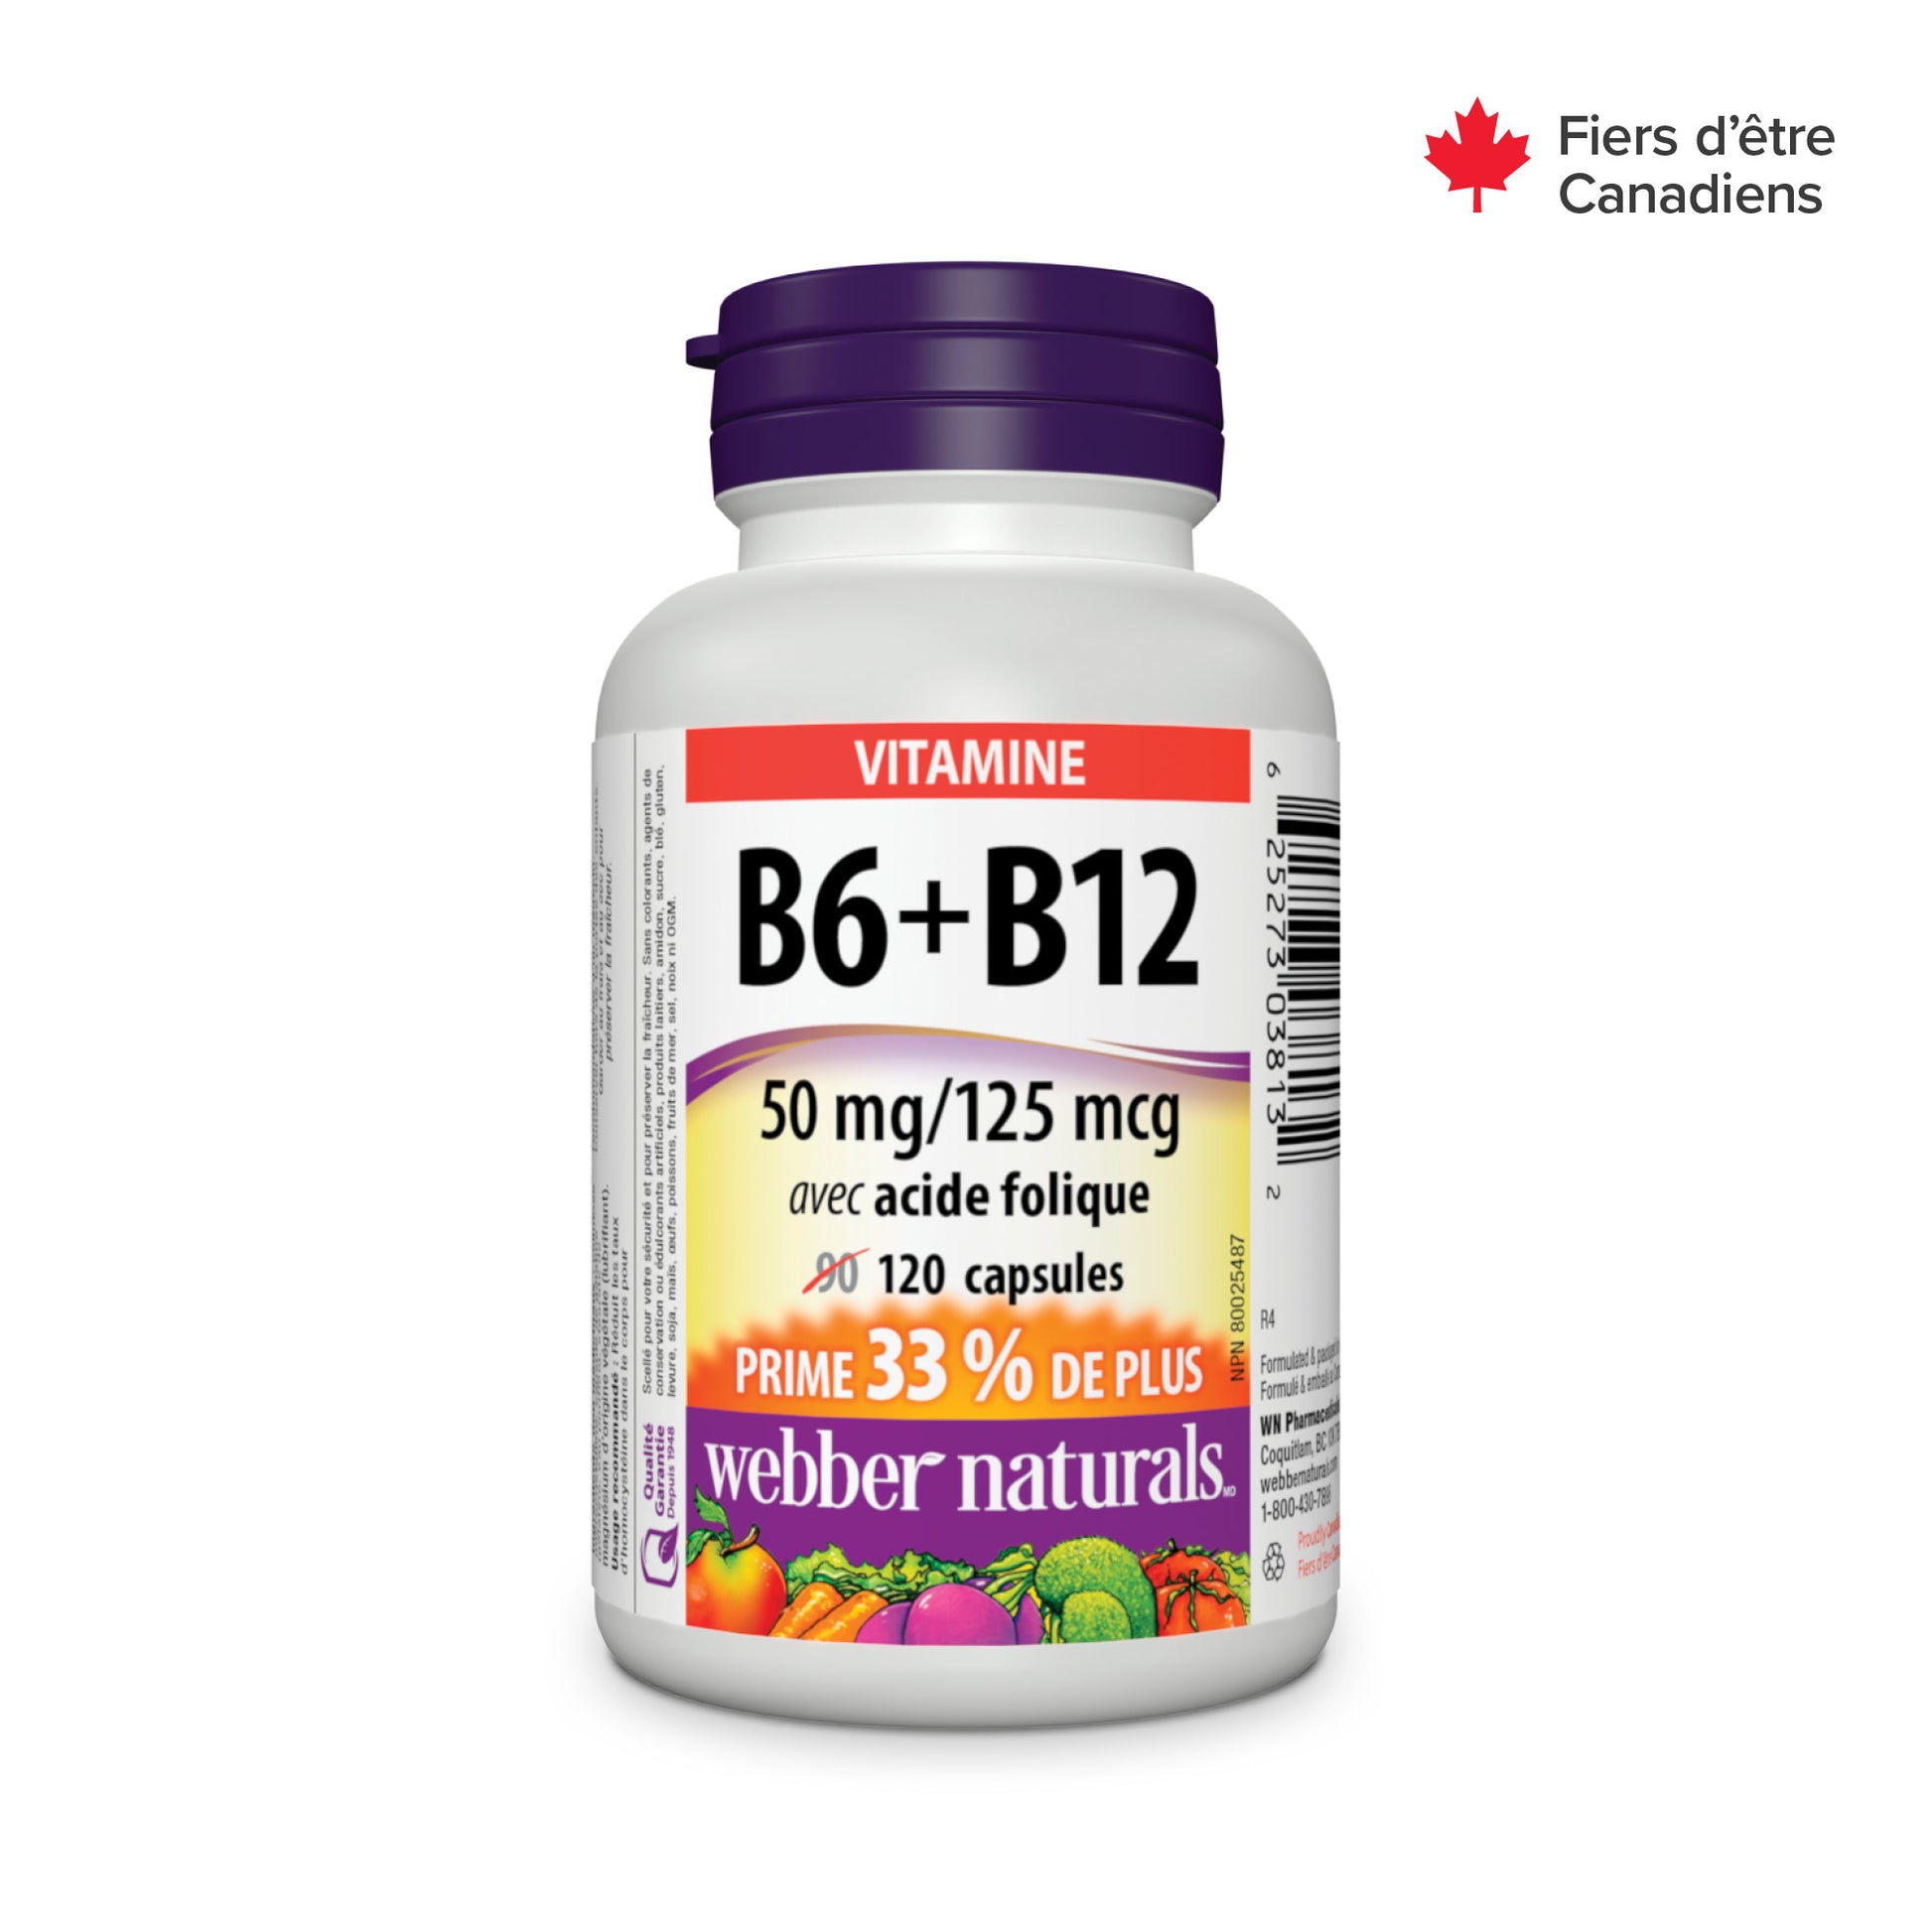 Vitamin B6+B12 with Folic Acid 50 mg / 125 mcg for Webber Naturals|v|hi-res|WN3813